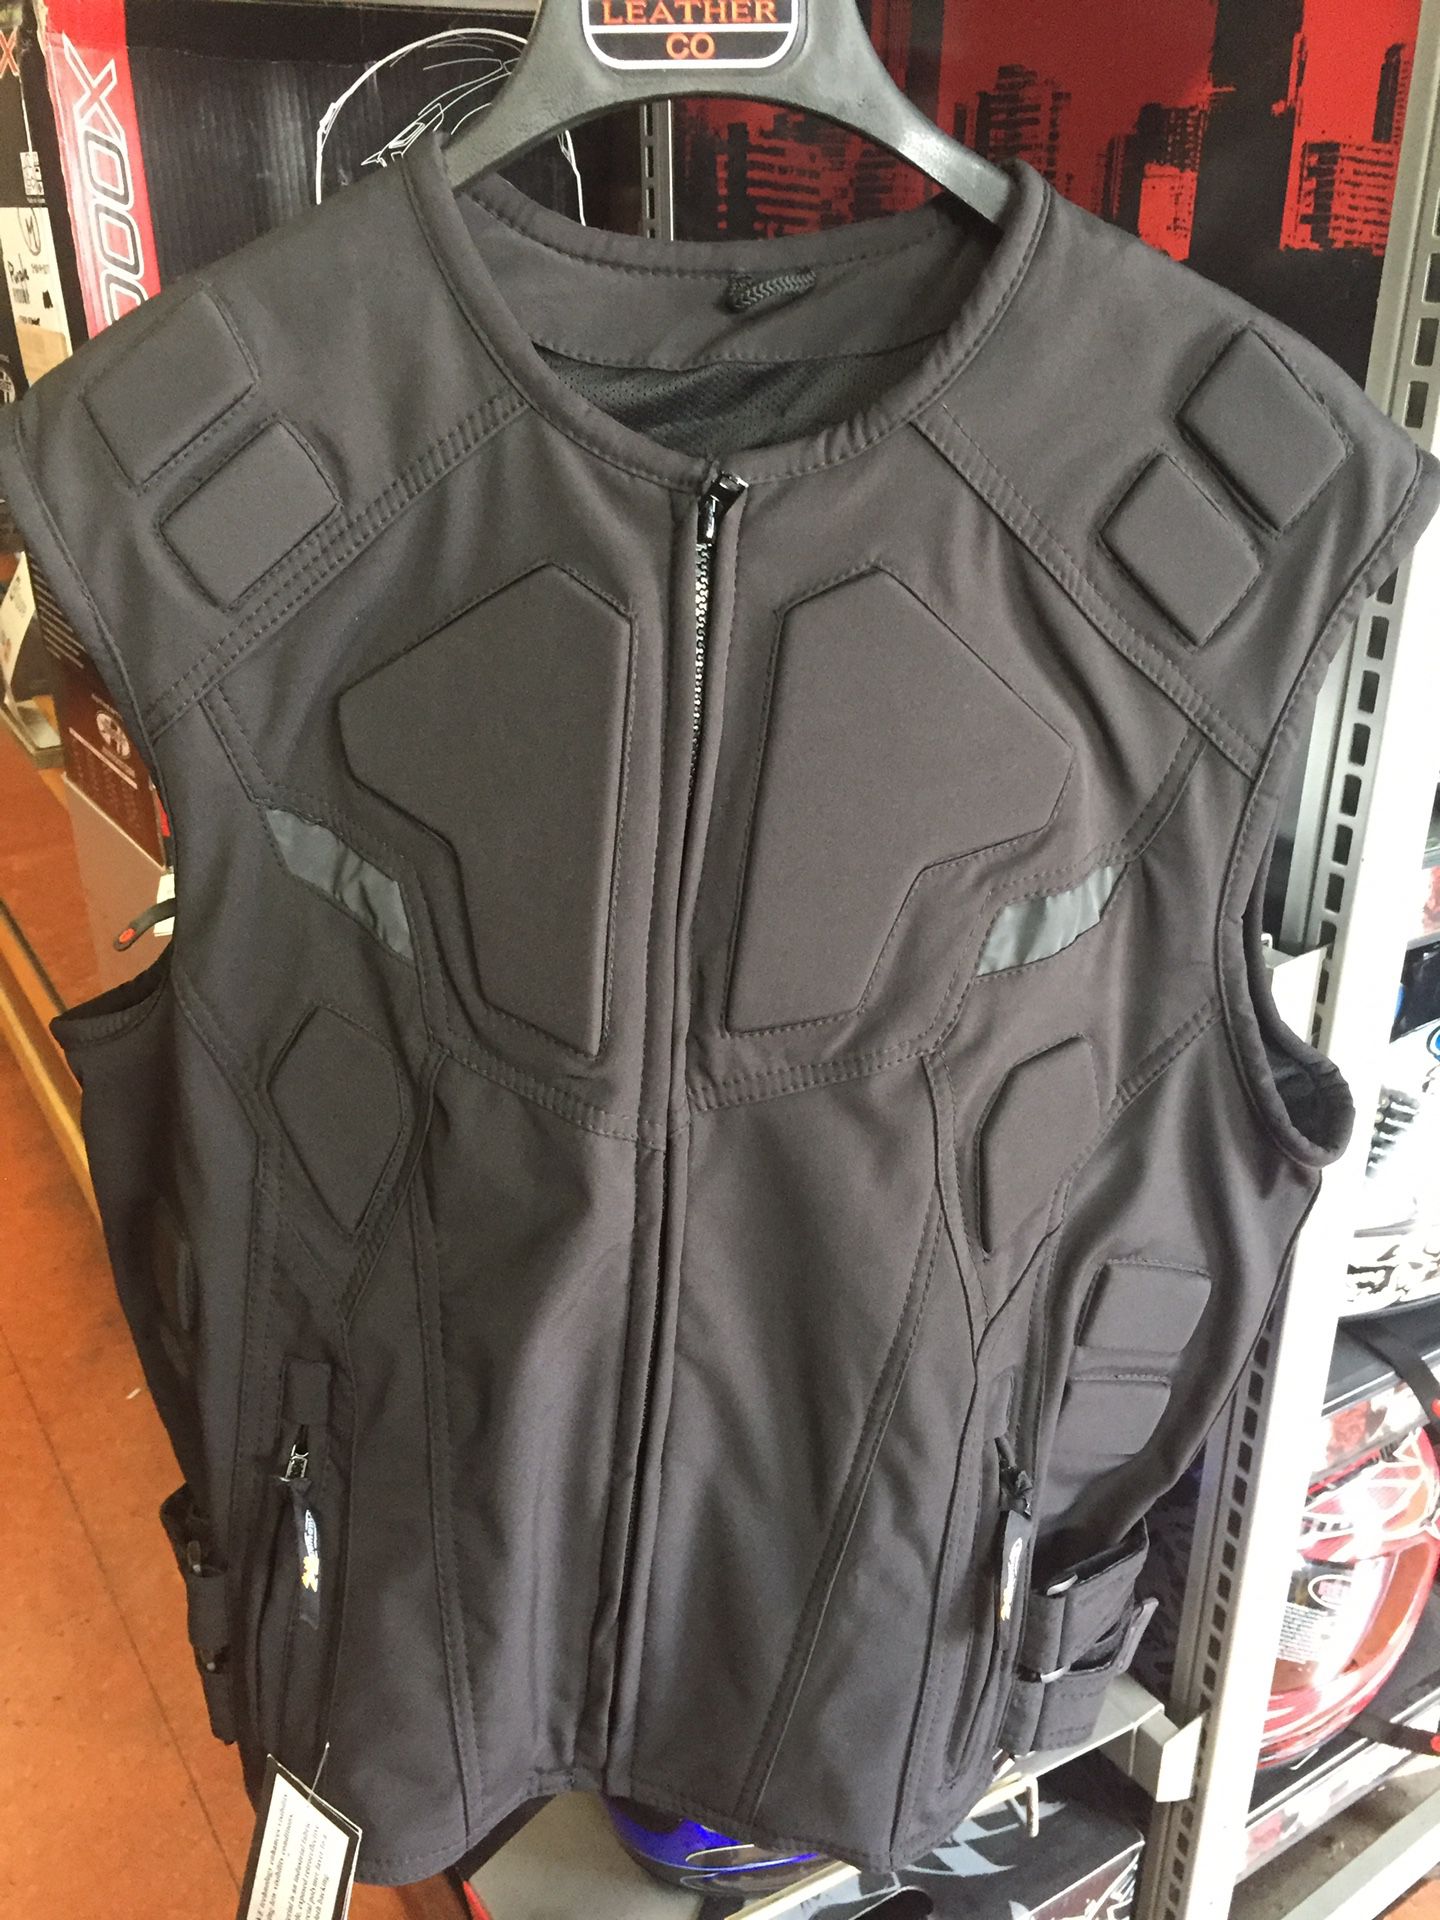 New motorcycle armor sport vest $90